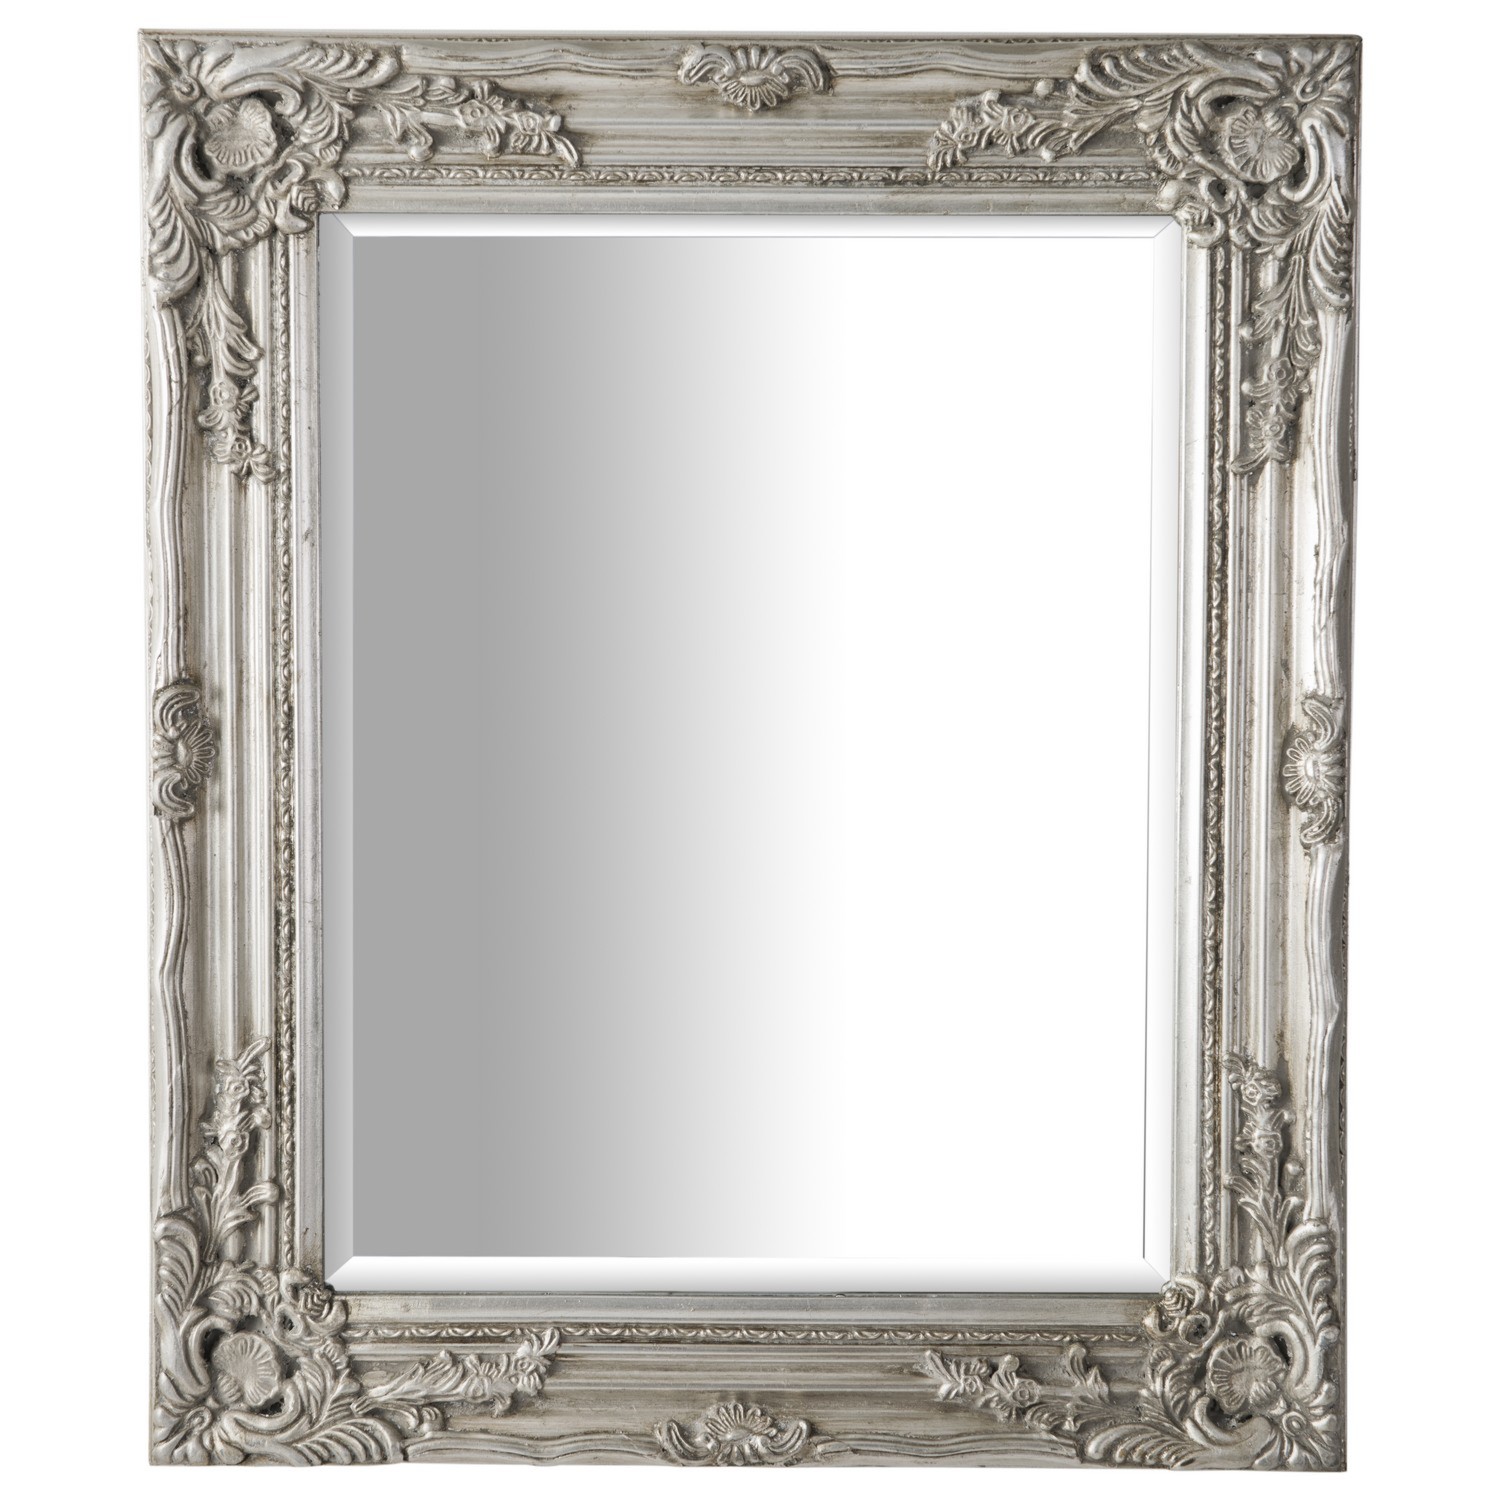 Silver Antique Ornate Large Mirror 94 x 74cm Image 1